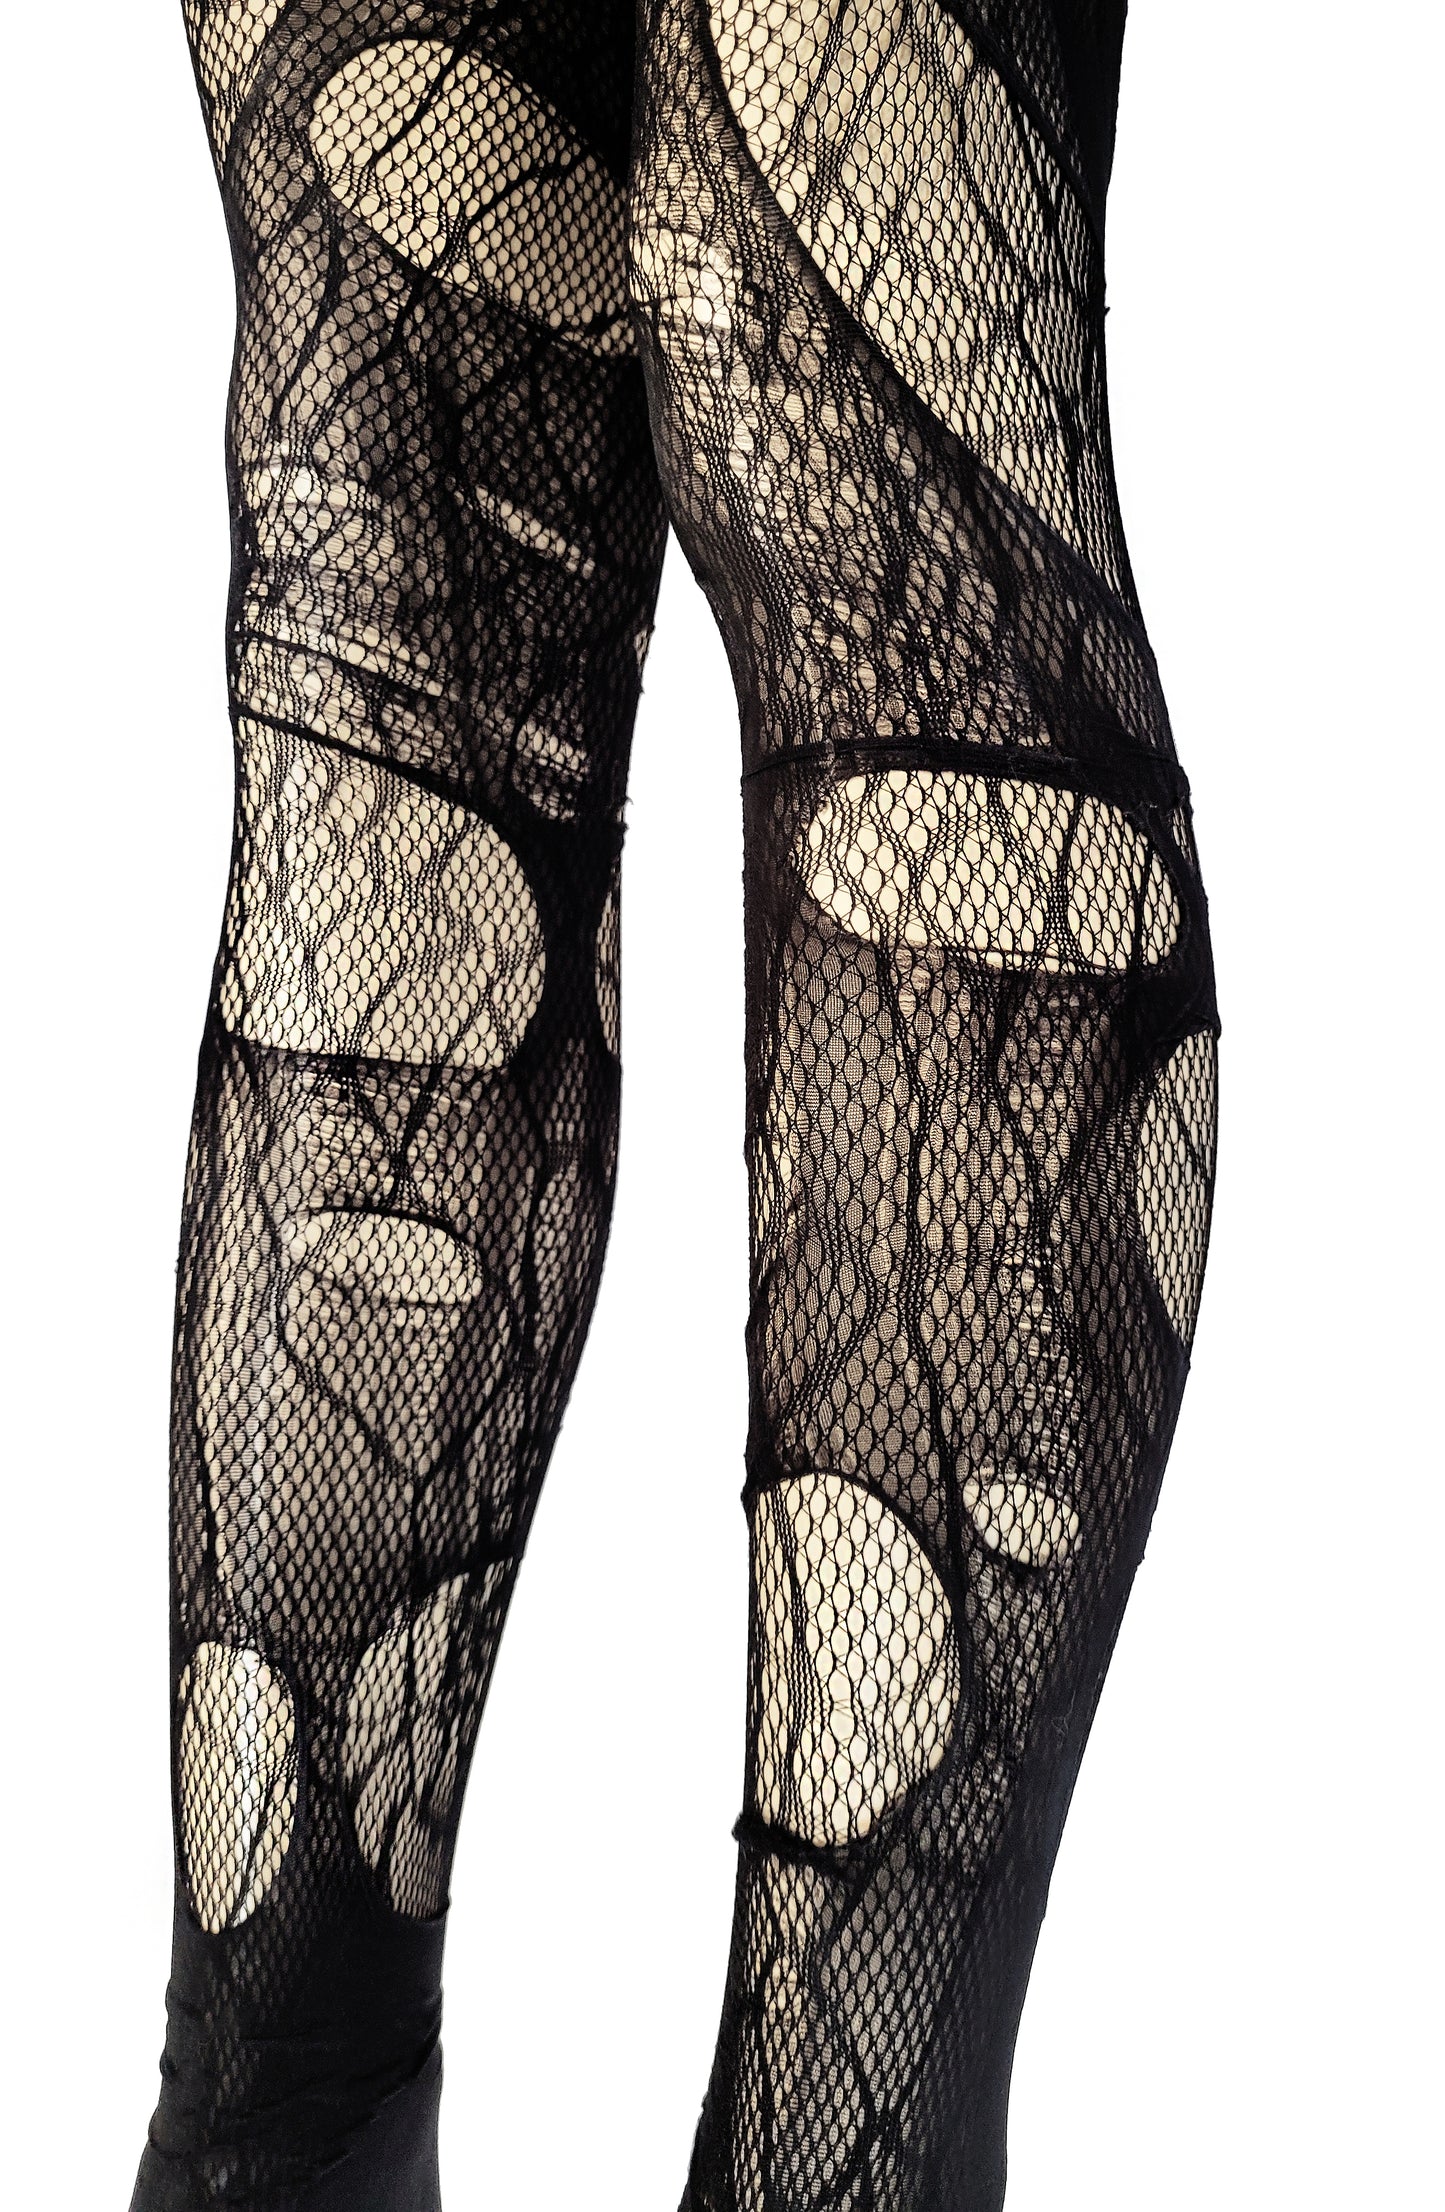 Tattered & torn tights fishnet tights | Spider webs